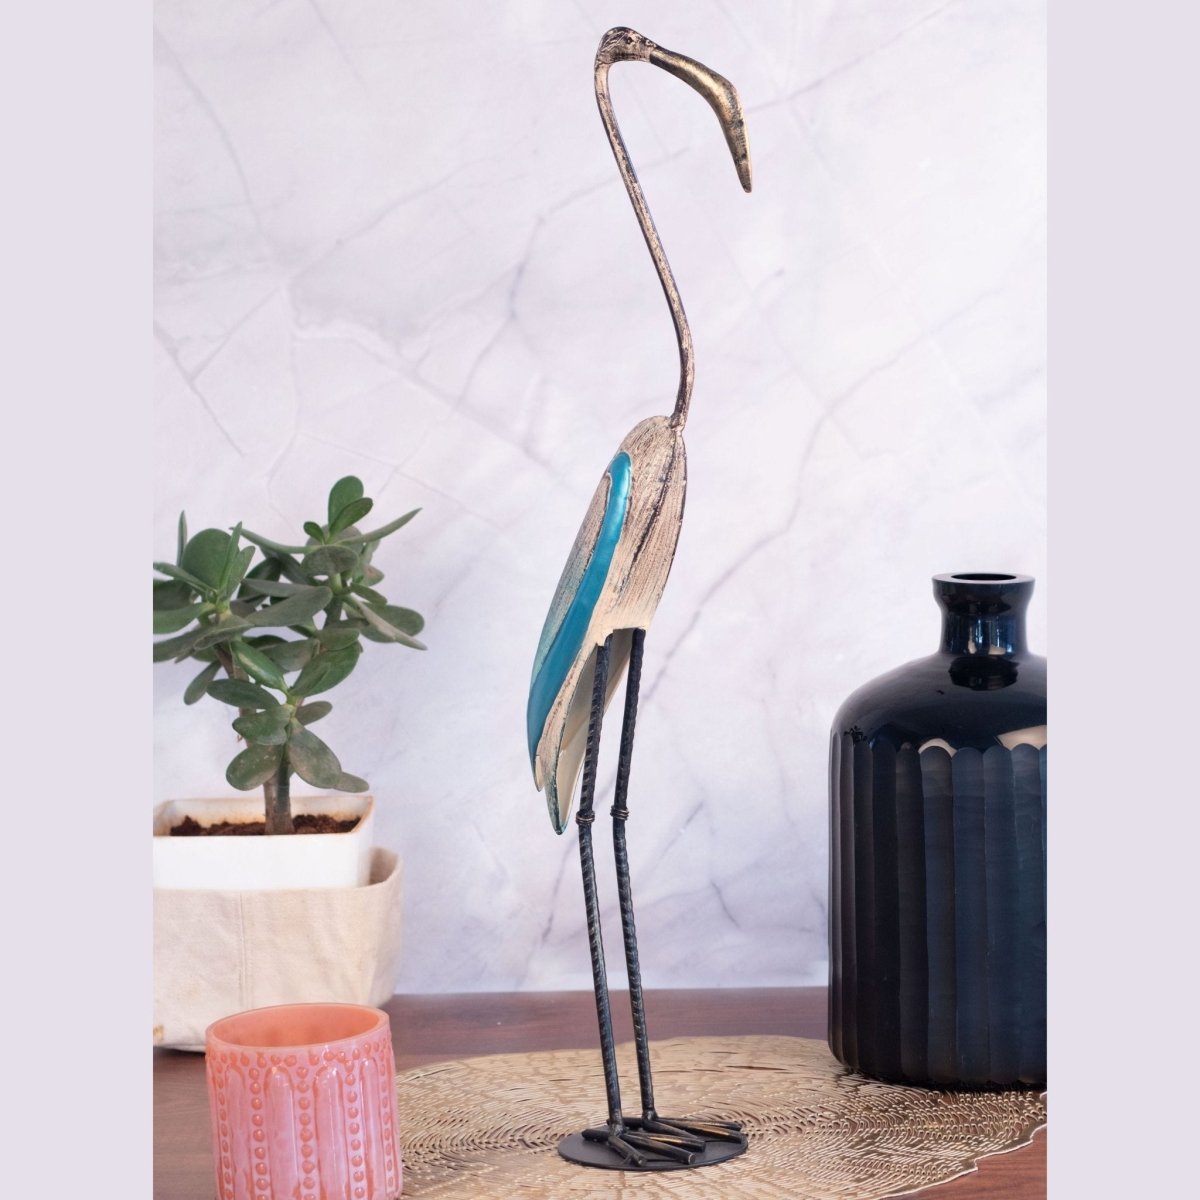 Kezevel Metal Birds Table Decor - Bird Figurines Statue in Antique Golden and Blue Finish, Metal Showpiece for Home Decor